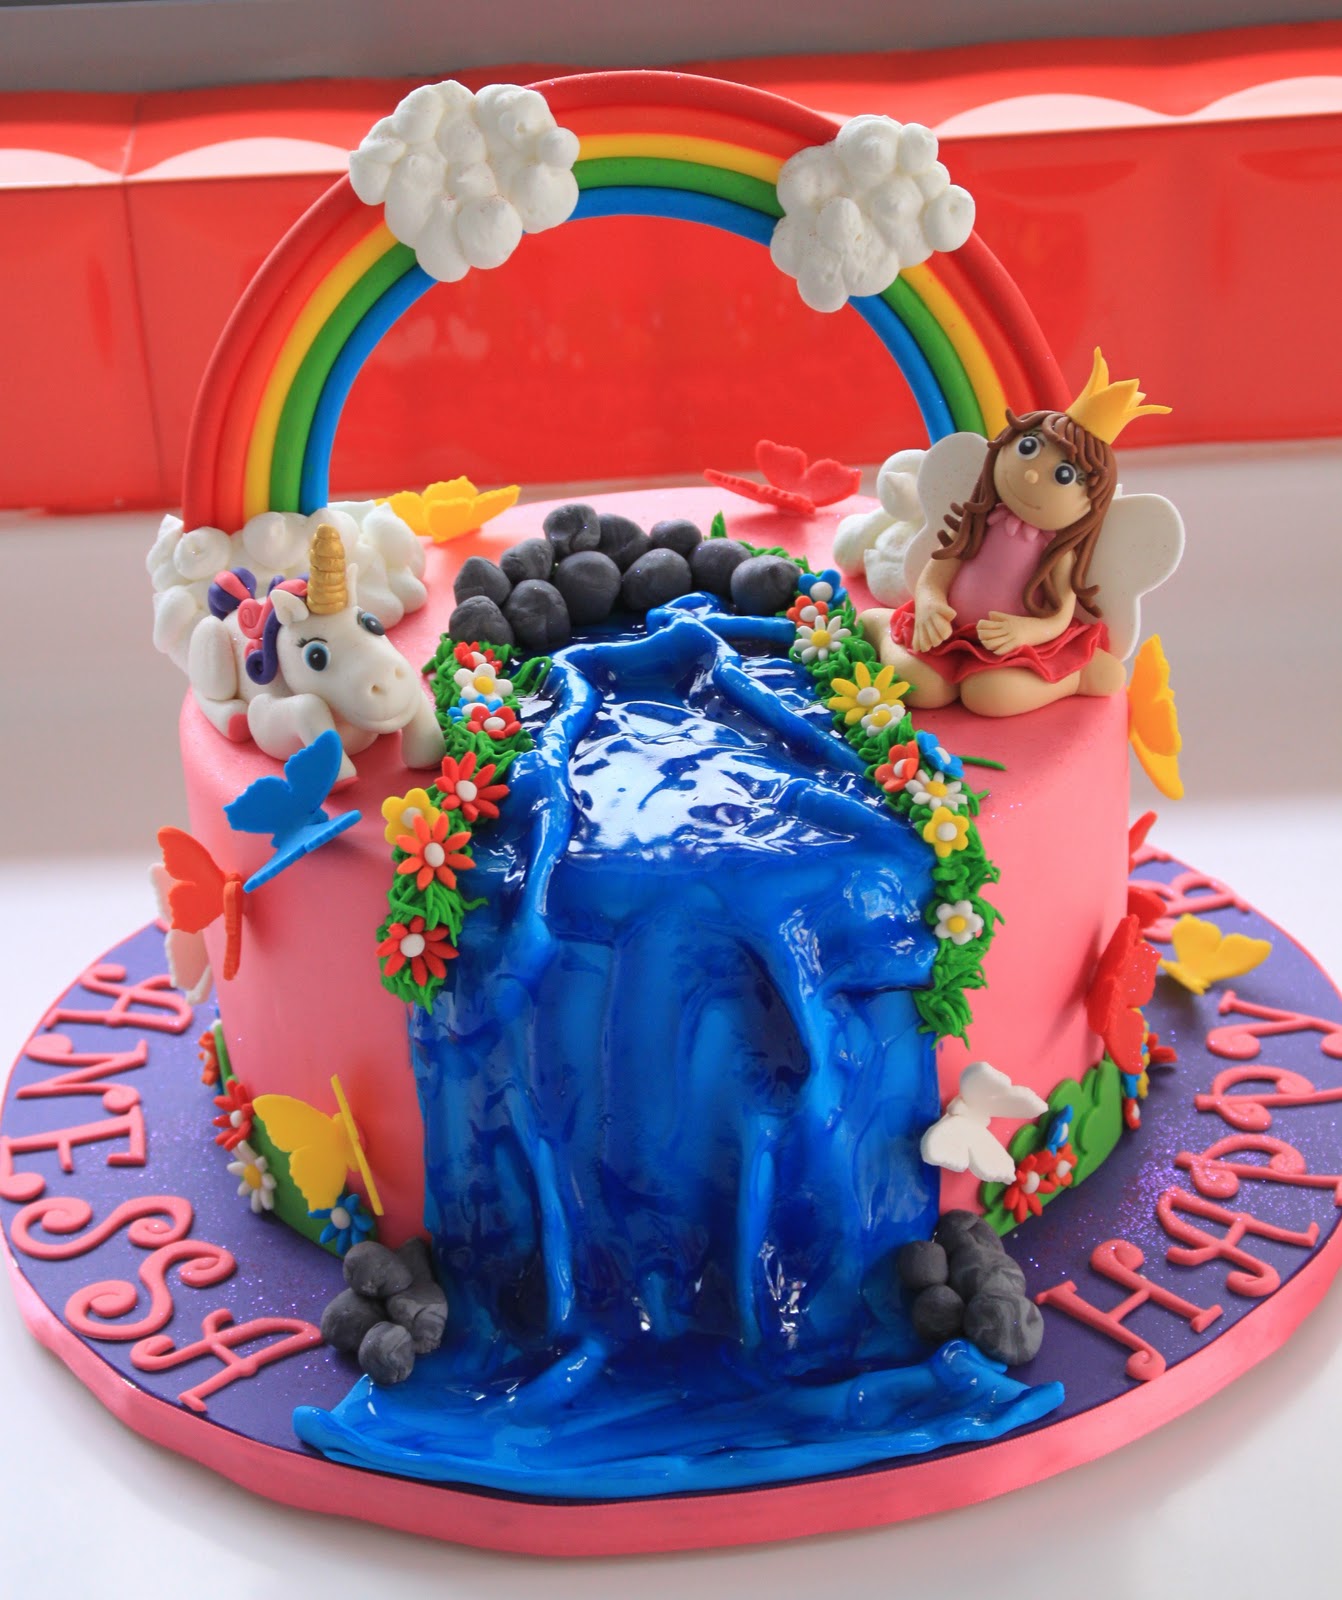 Celebrate with Cake!: Fairy, Unicorn and Waterfall Rainbow Cake